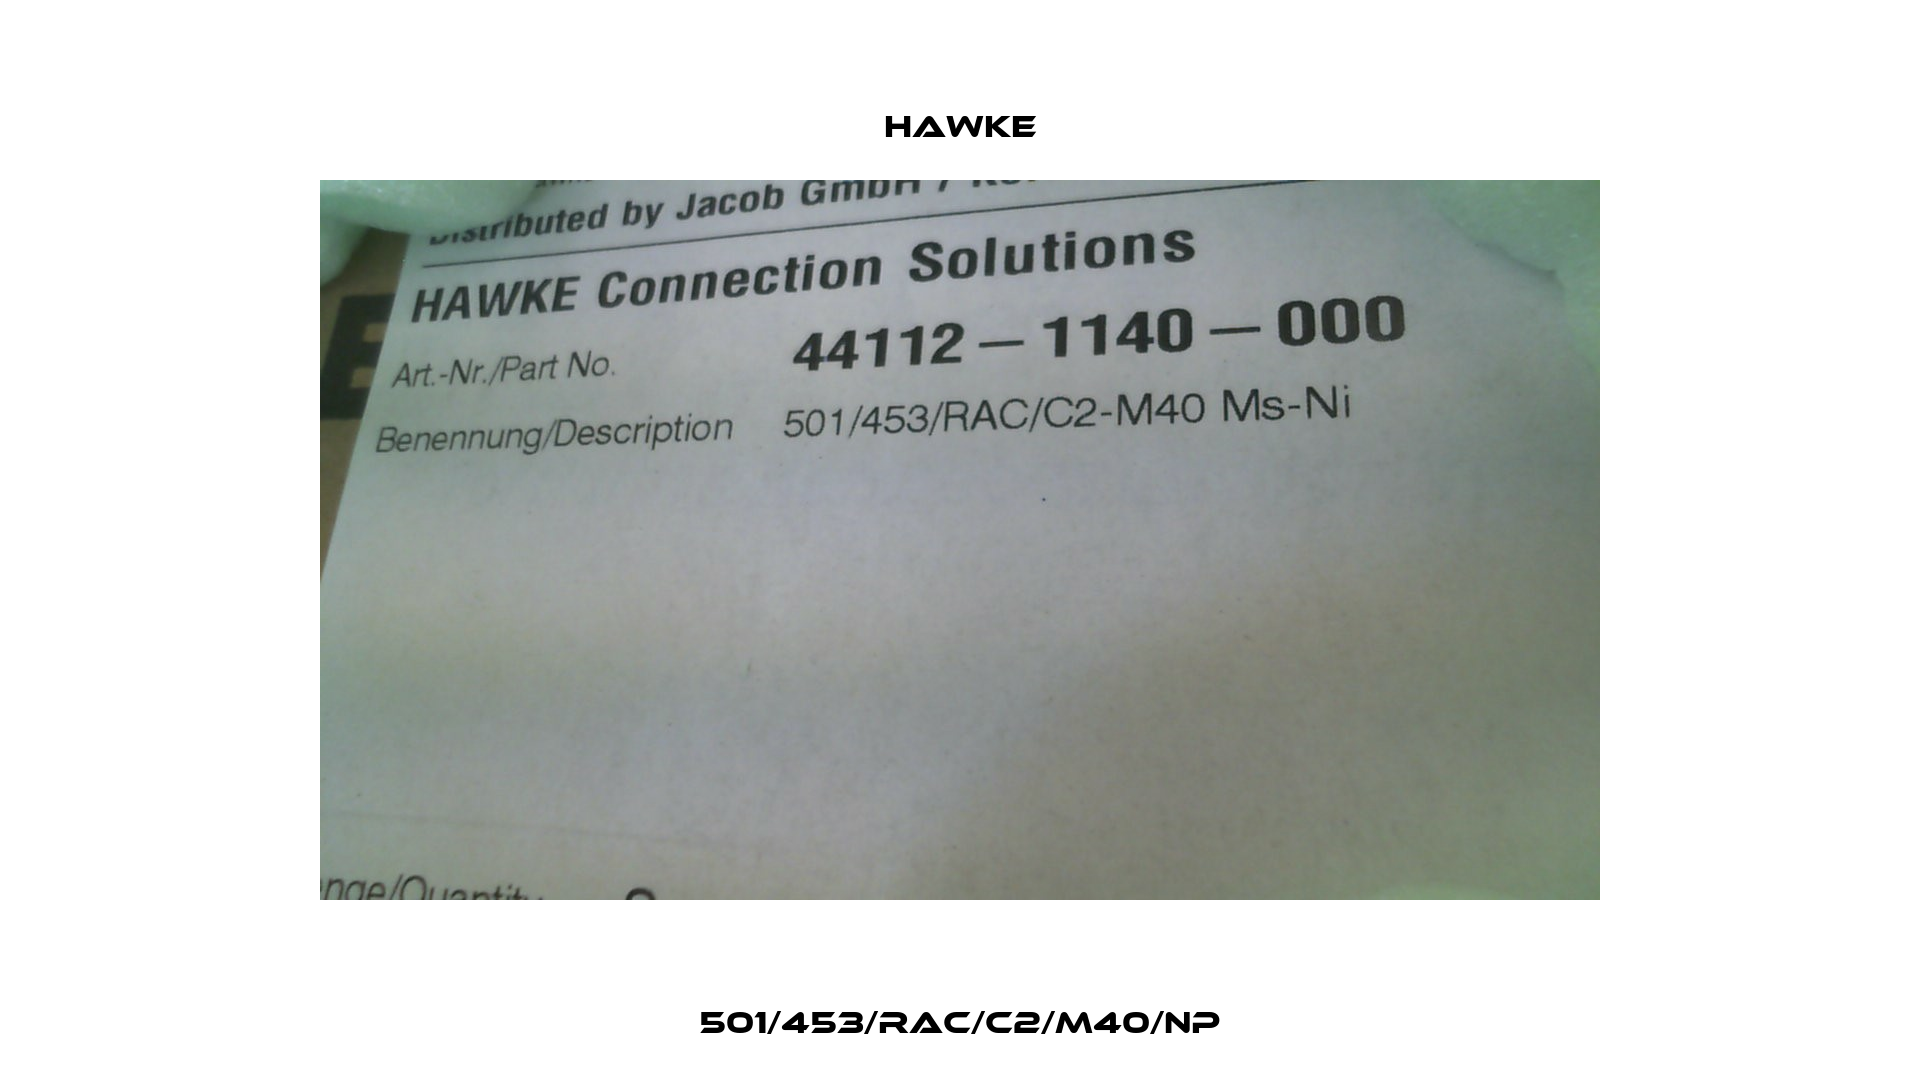 501/453/RAC/C2/M40/NP Hawke